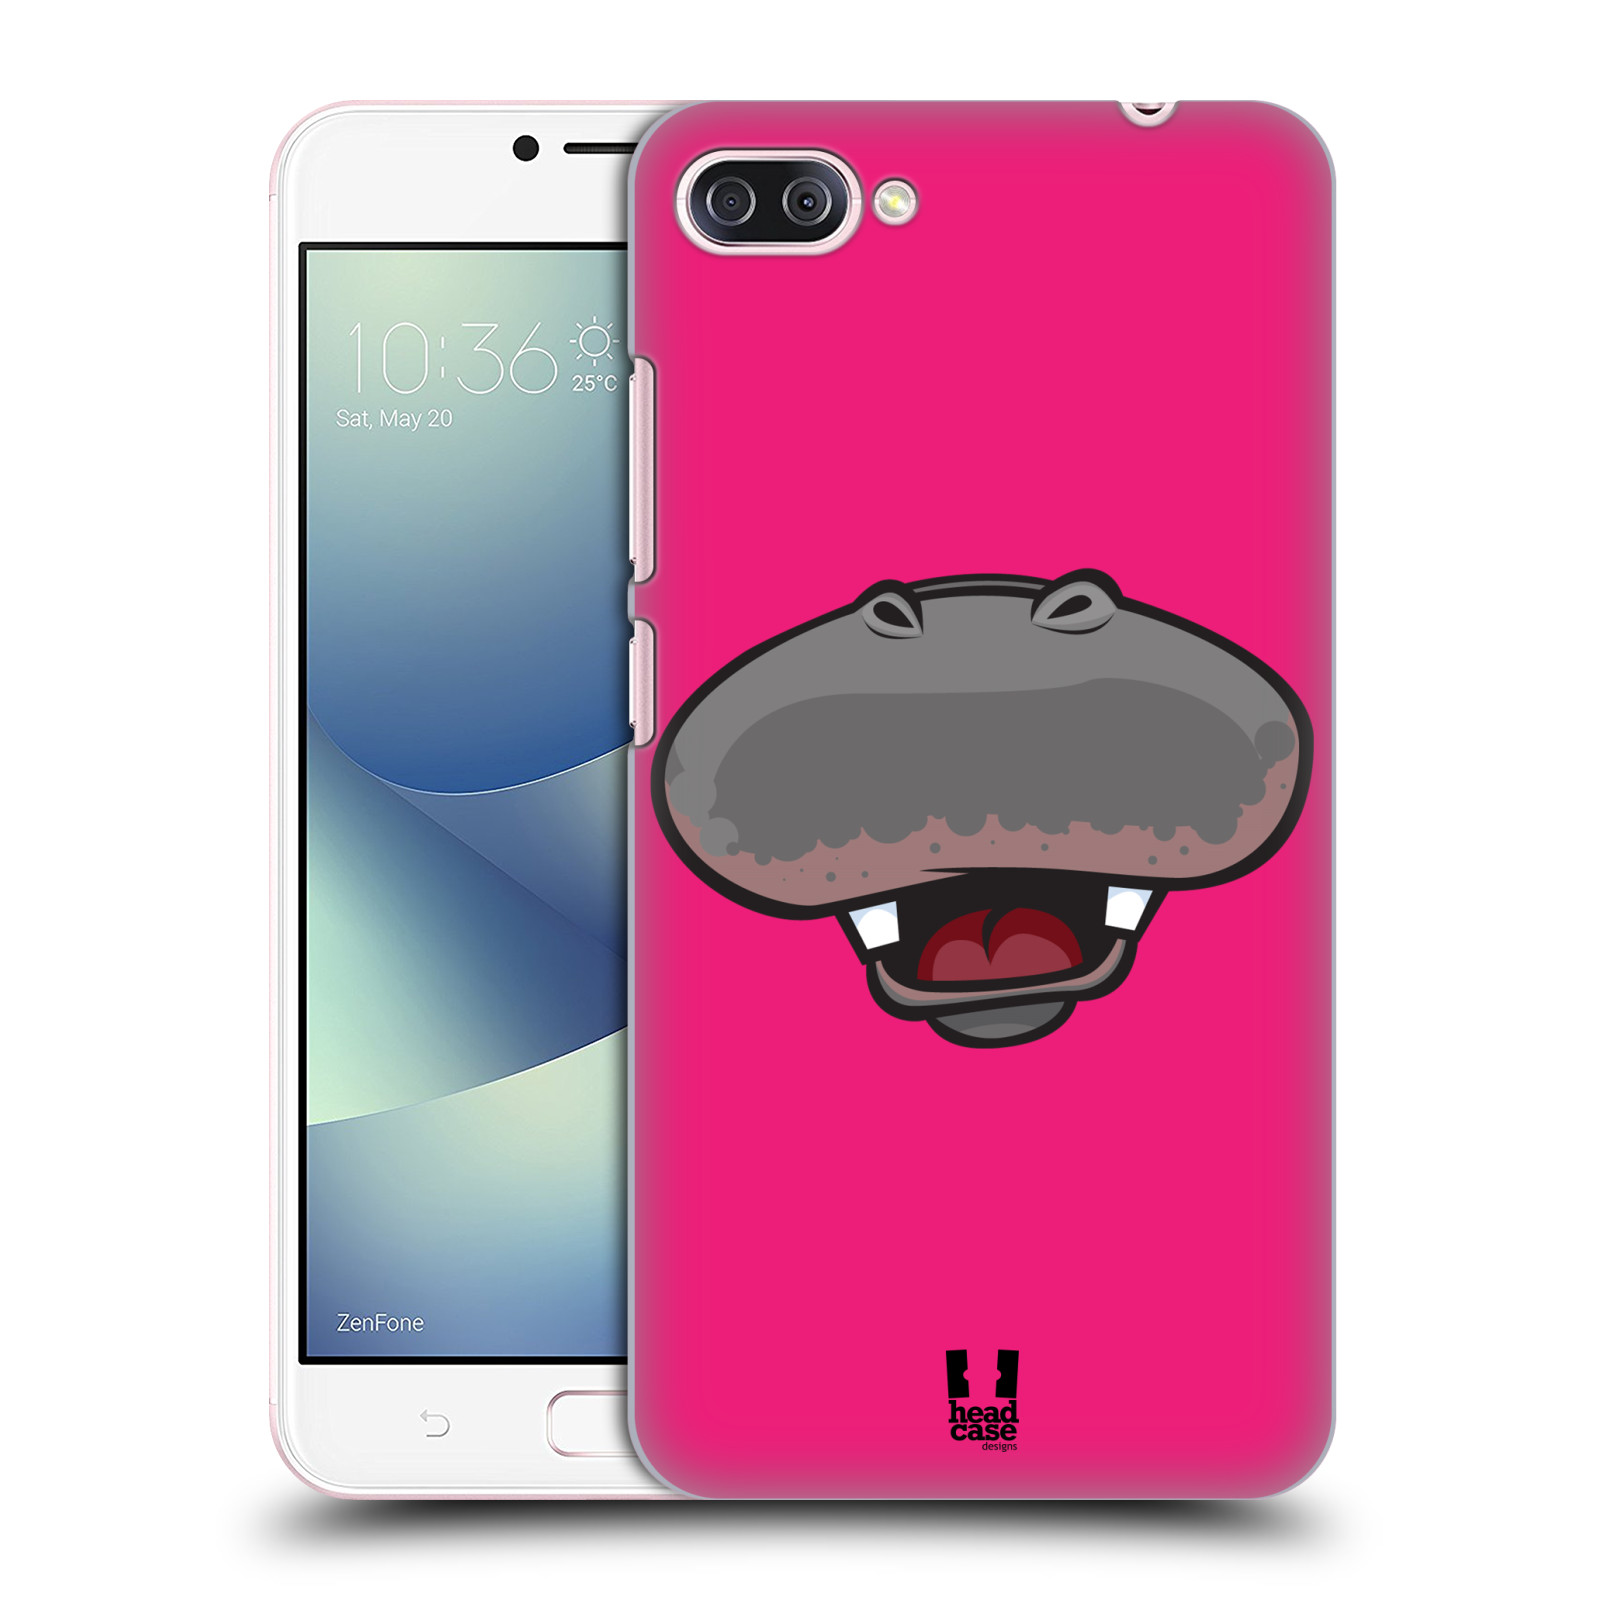 HEAD CASE plastový obal na mobil Asus Zenfone 4 MAX ZC554KL vzor Zvířecí úsměv hroch růžová